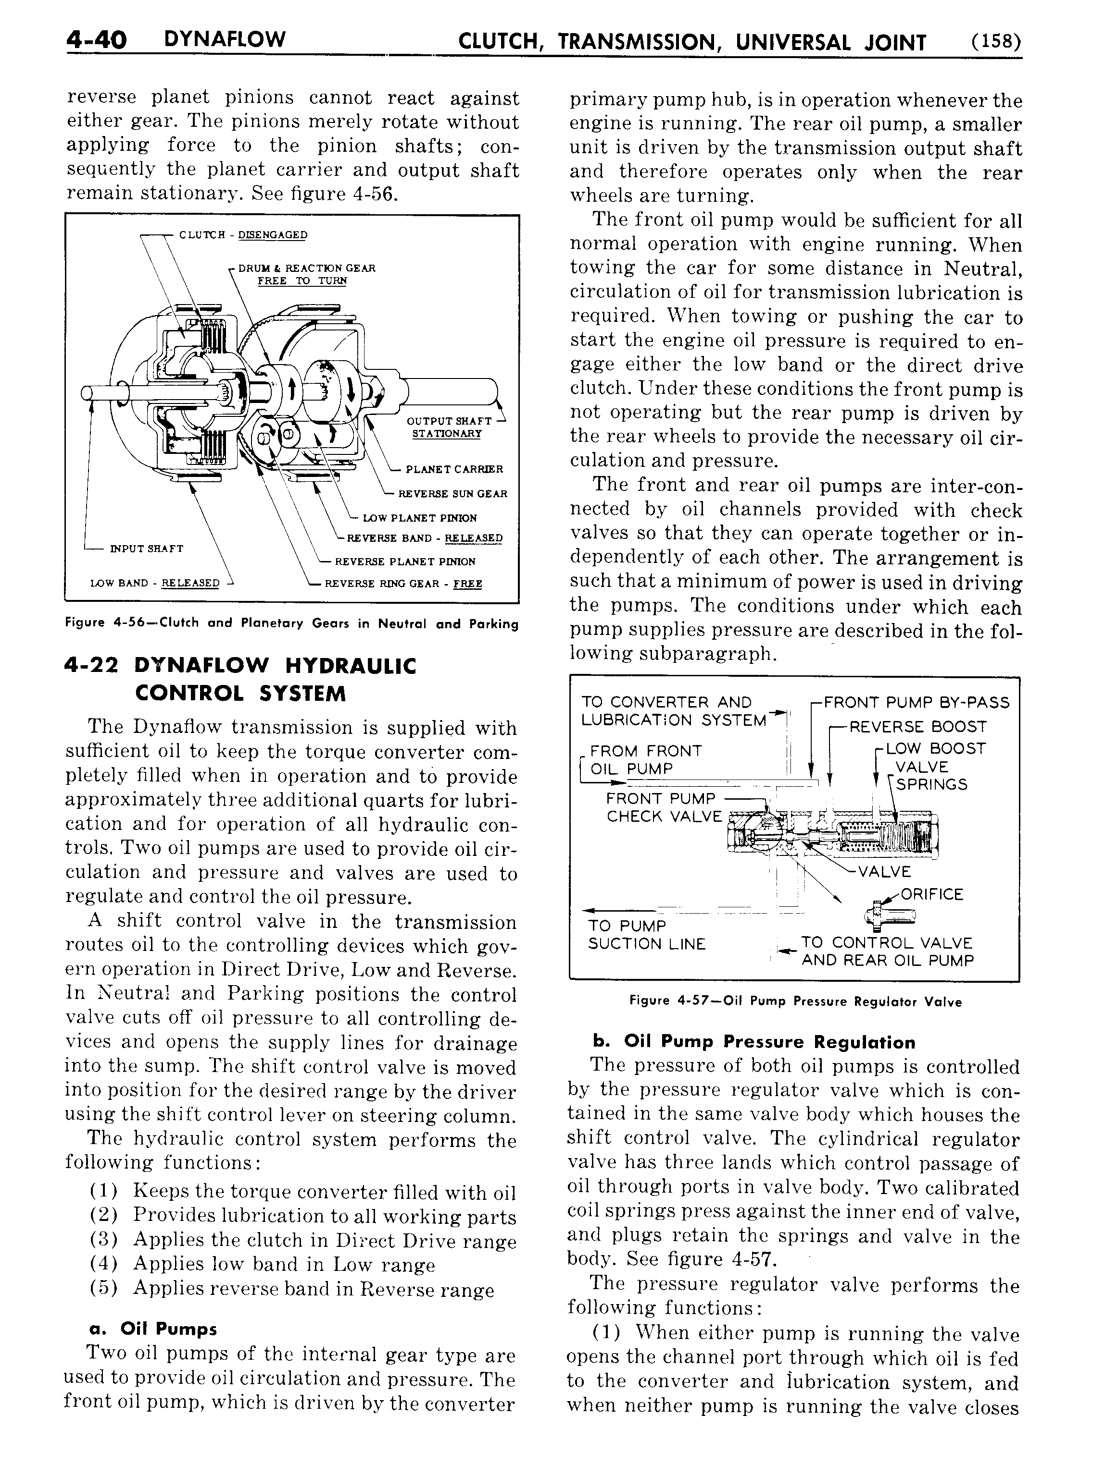 n_05 1951 Buick Shop Manual - Transmission-040-040.jpg